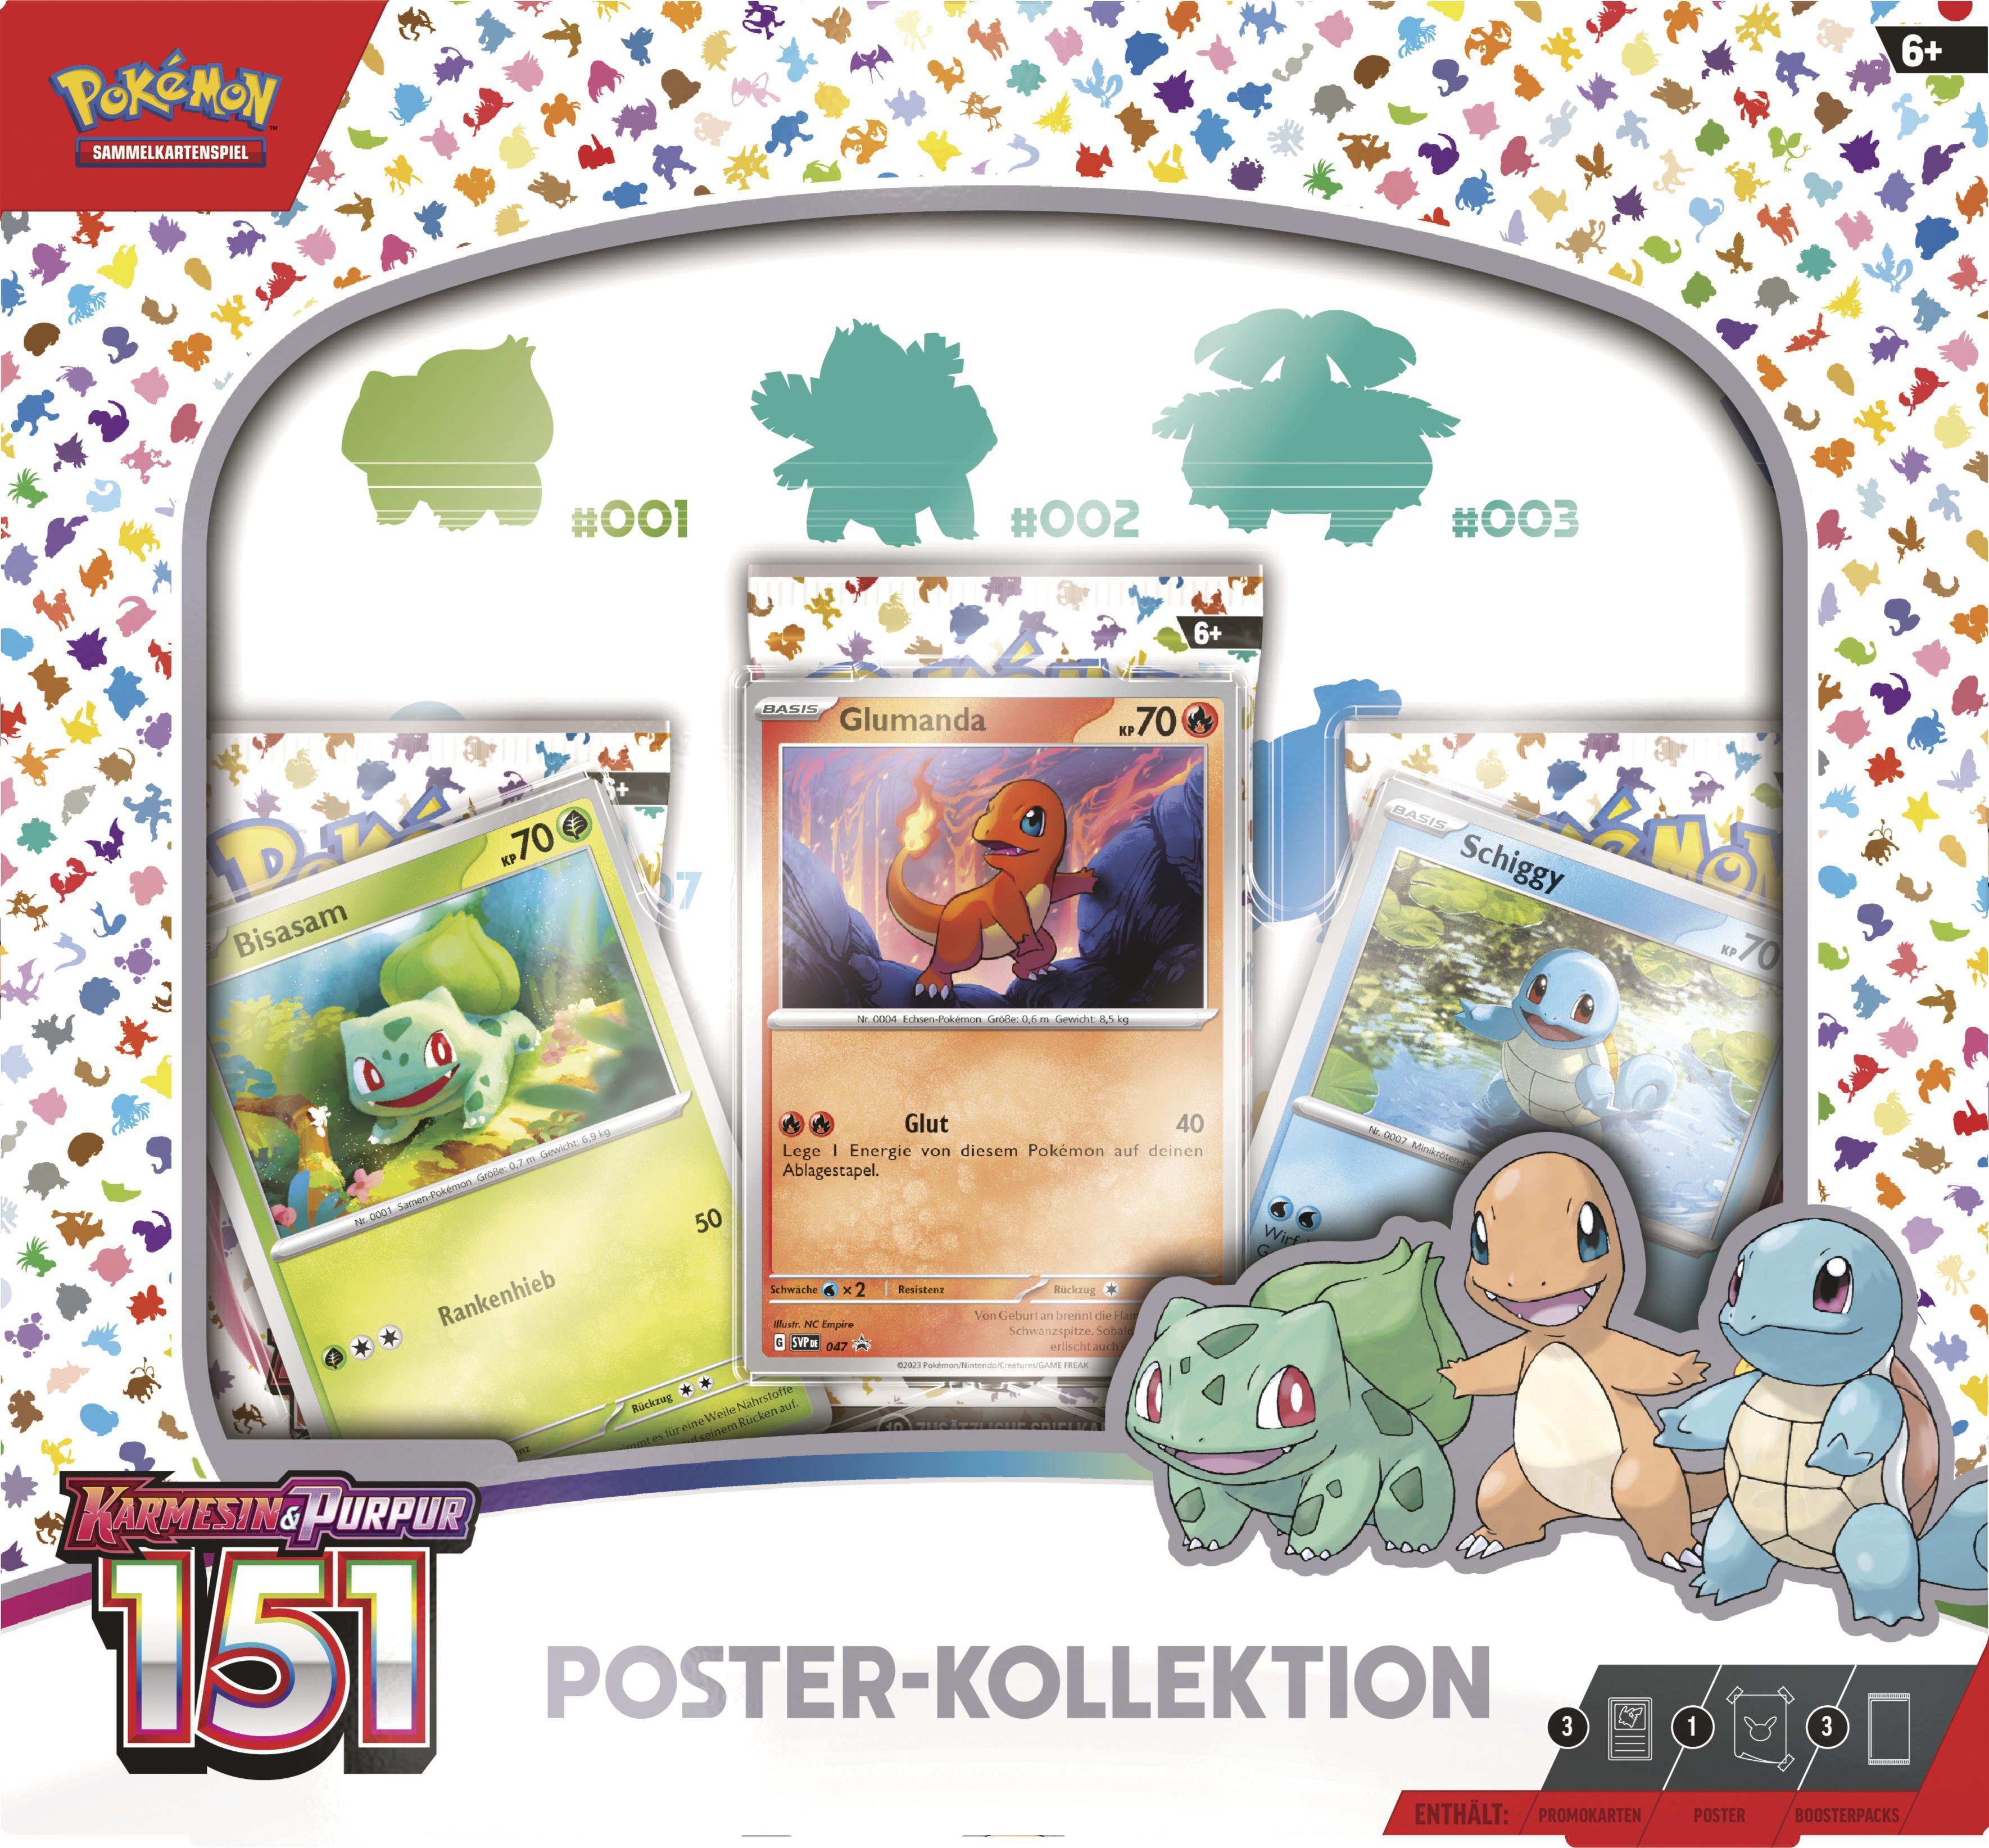 THE POKEMON 151 Pokémon KP03.5 COMPANY 45557 Box- Sammelkarten INT. Poster